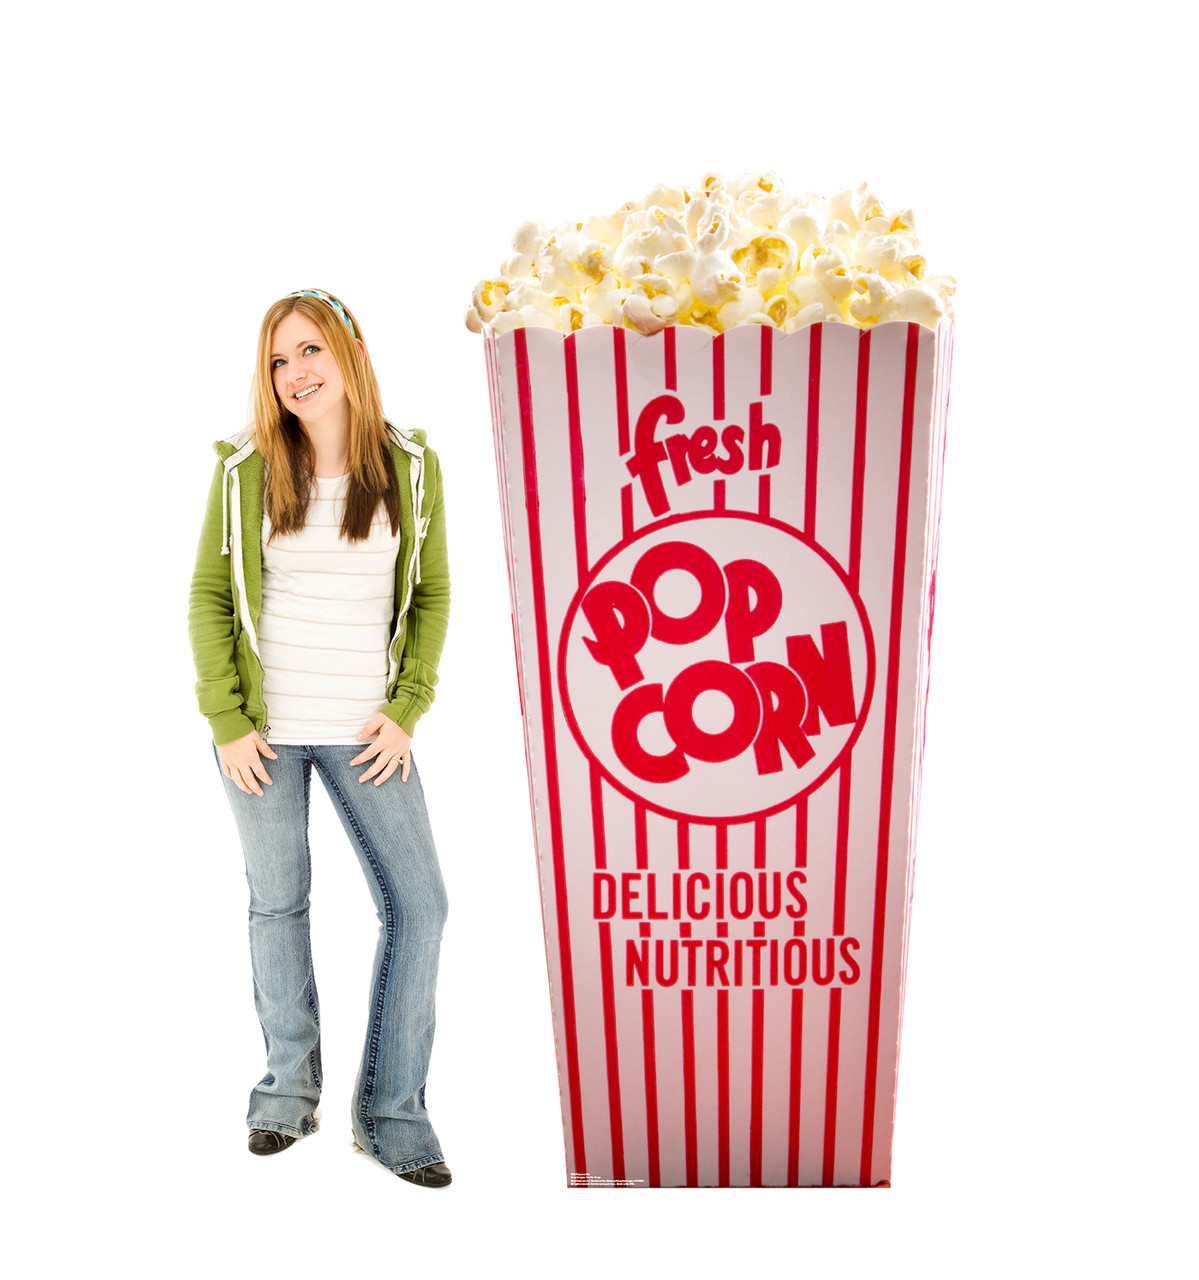 Life-size Popcorn Box Cardboard Cutout